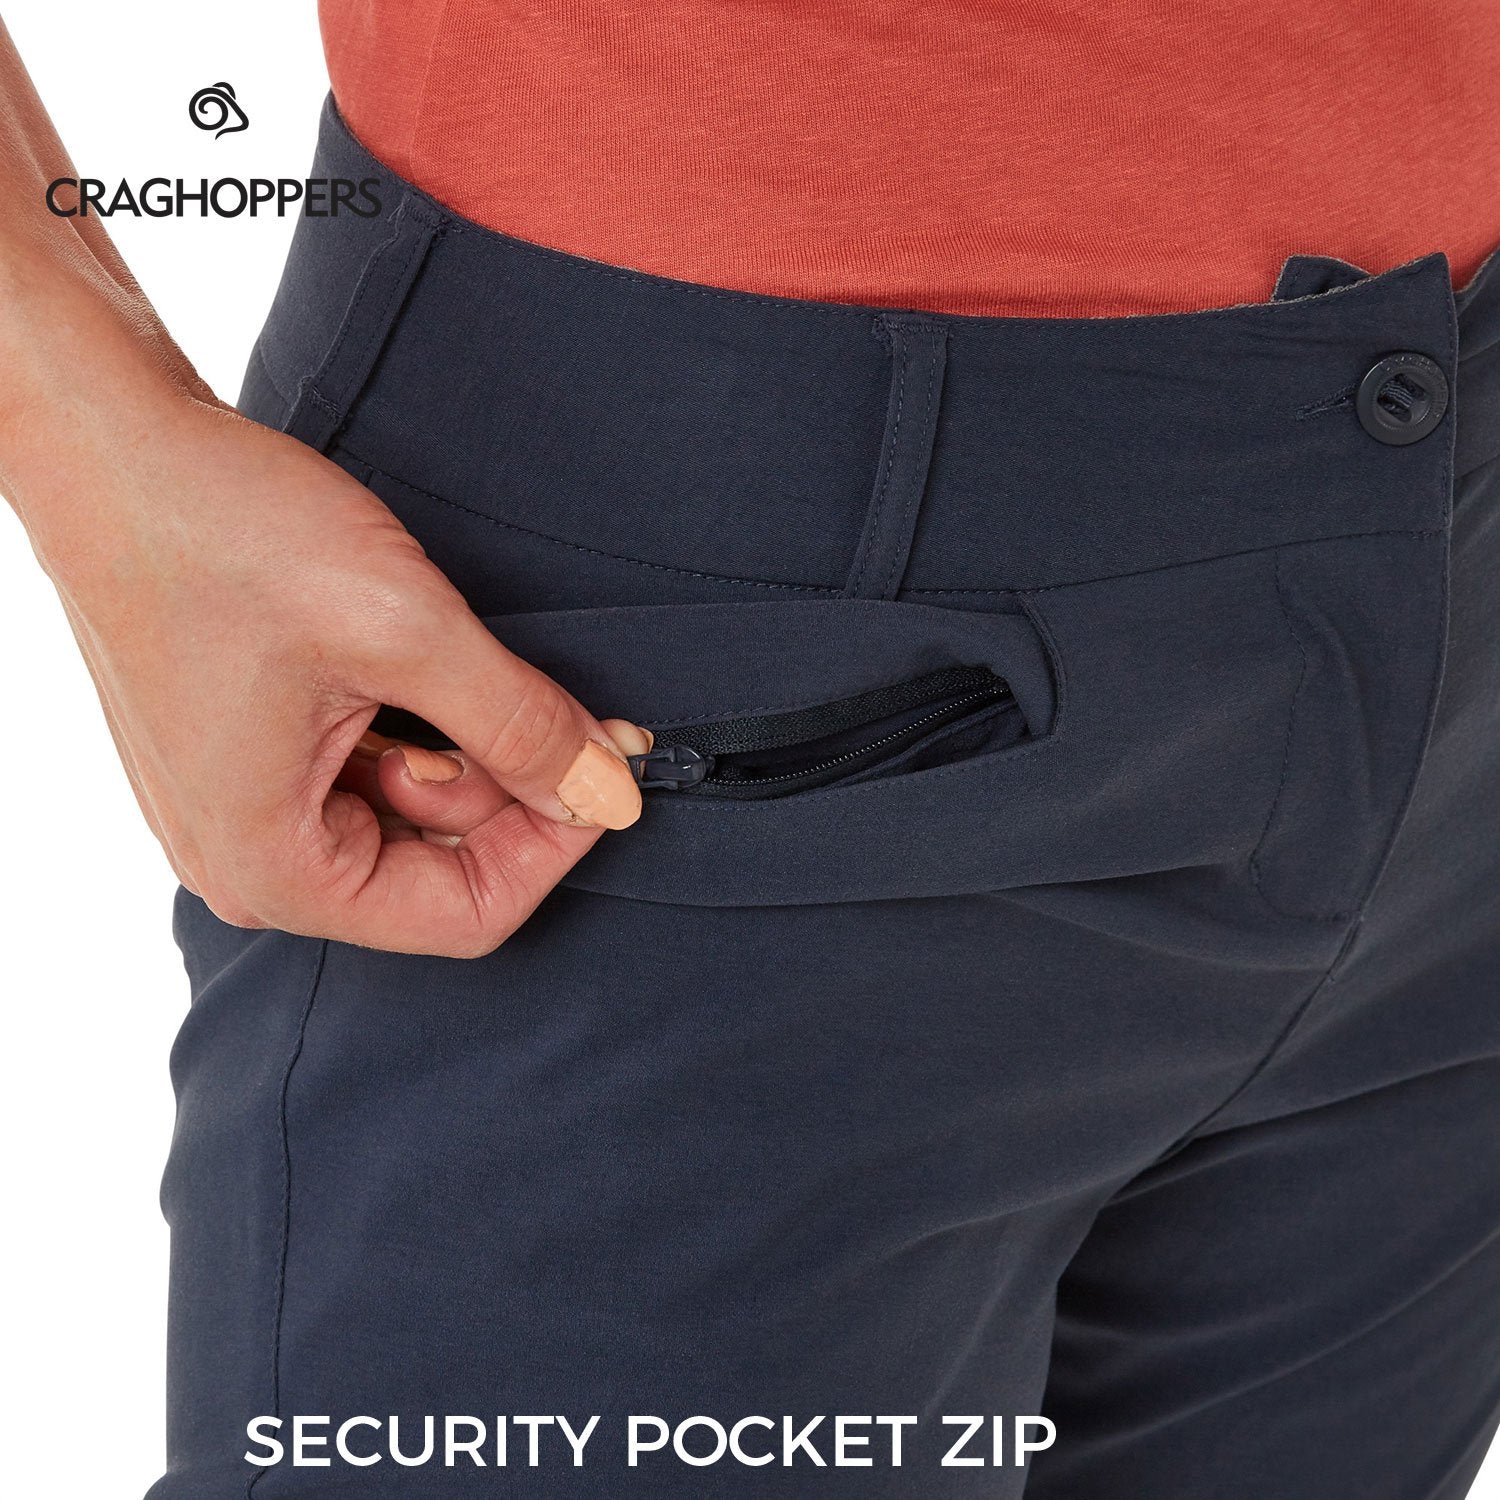 Secure zip pocket